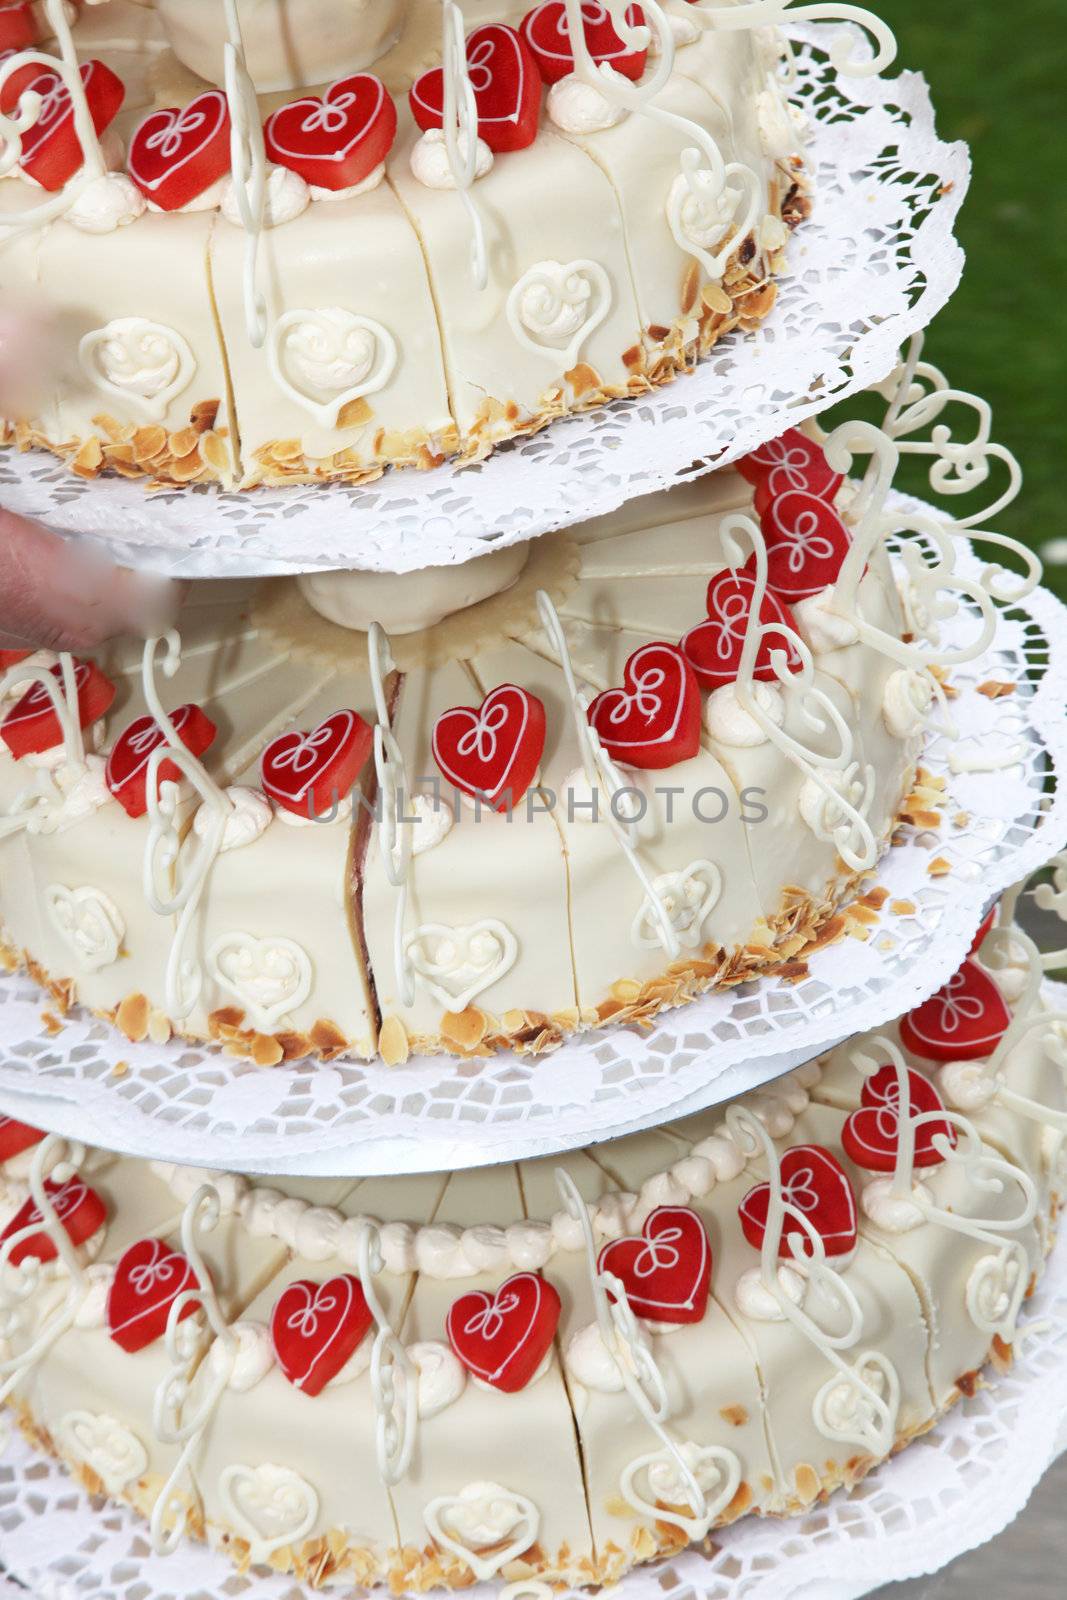 Ornate wedding cake  by Farina6000